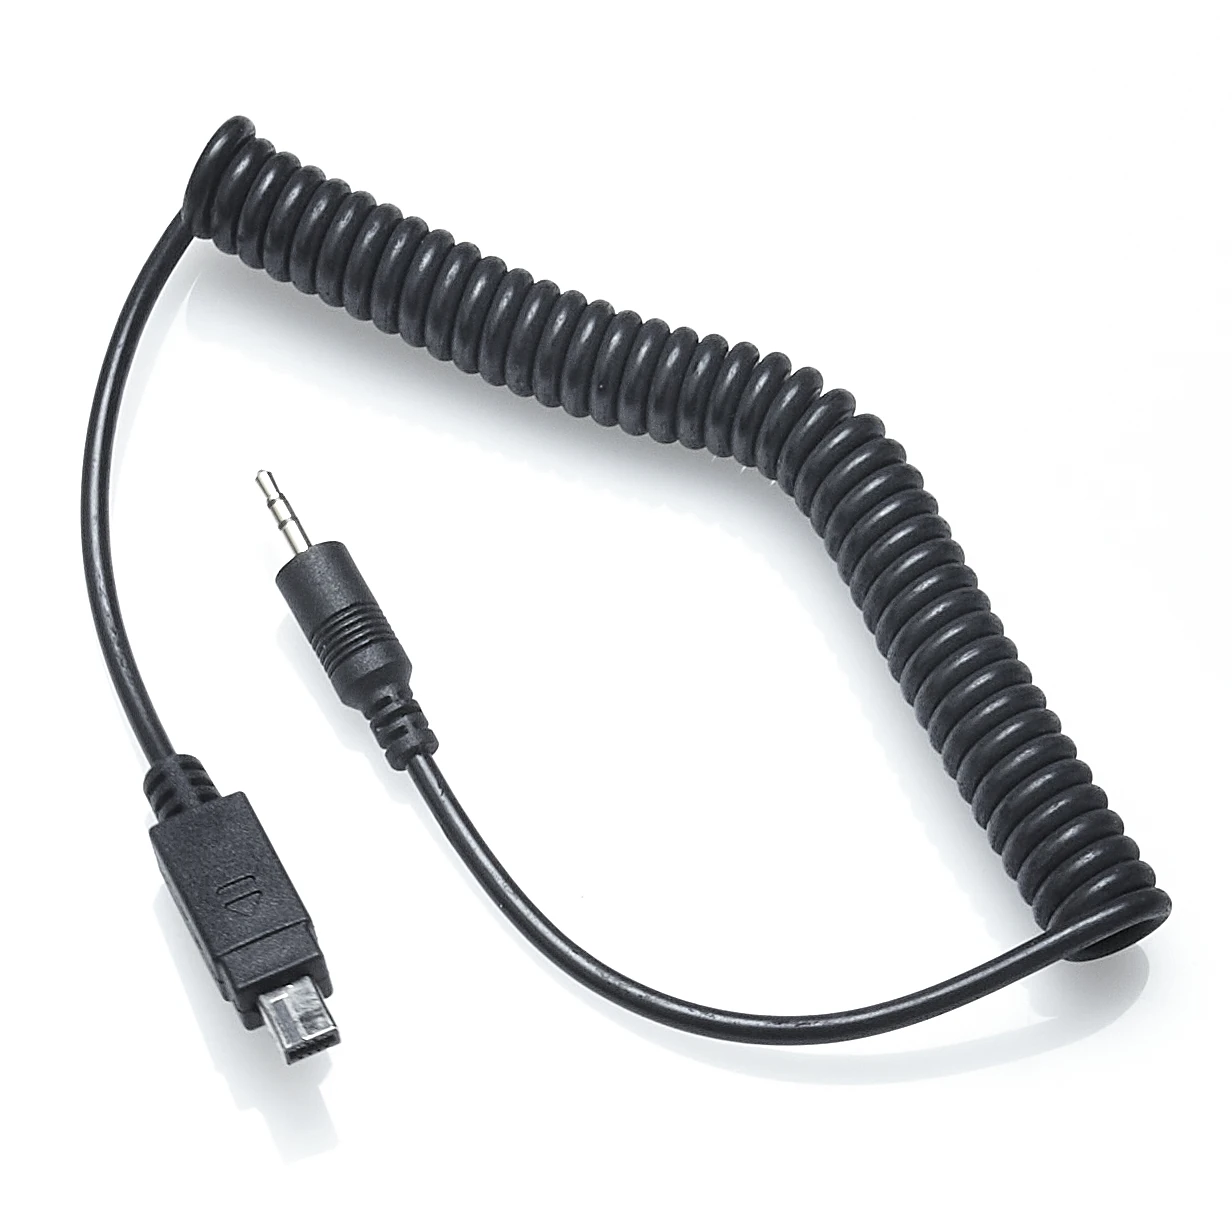 F9980-7L cable disparador compatible con Nikon MC-DC2